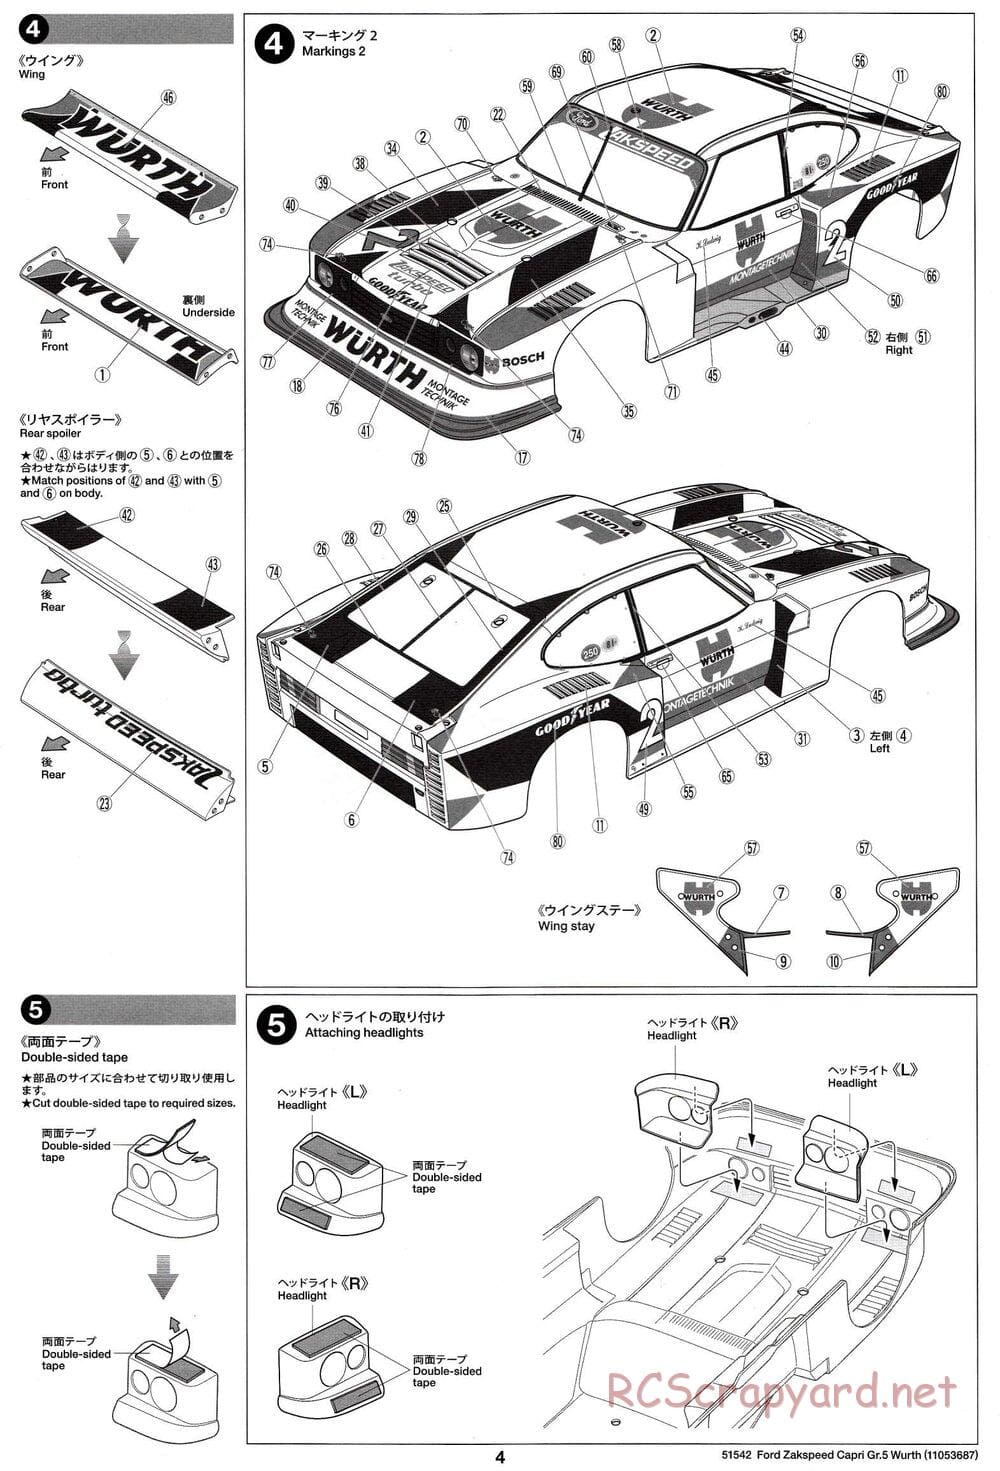 Tamiya - Ford Zakspeed Turbo Capri Gr.5 Wurth - TT-02 Chassis - Body Manual - Page 4